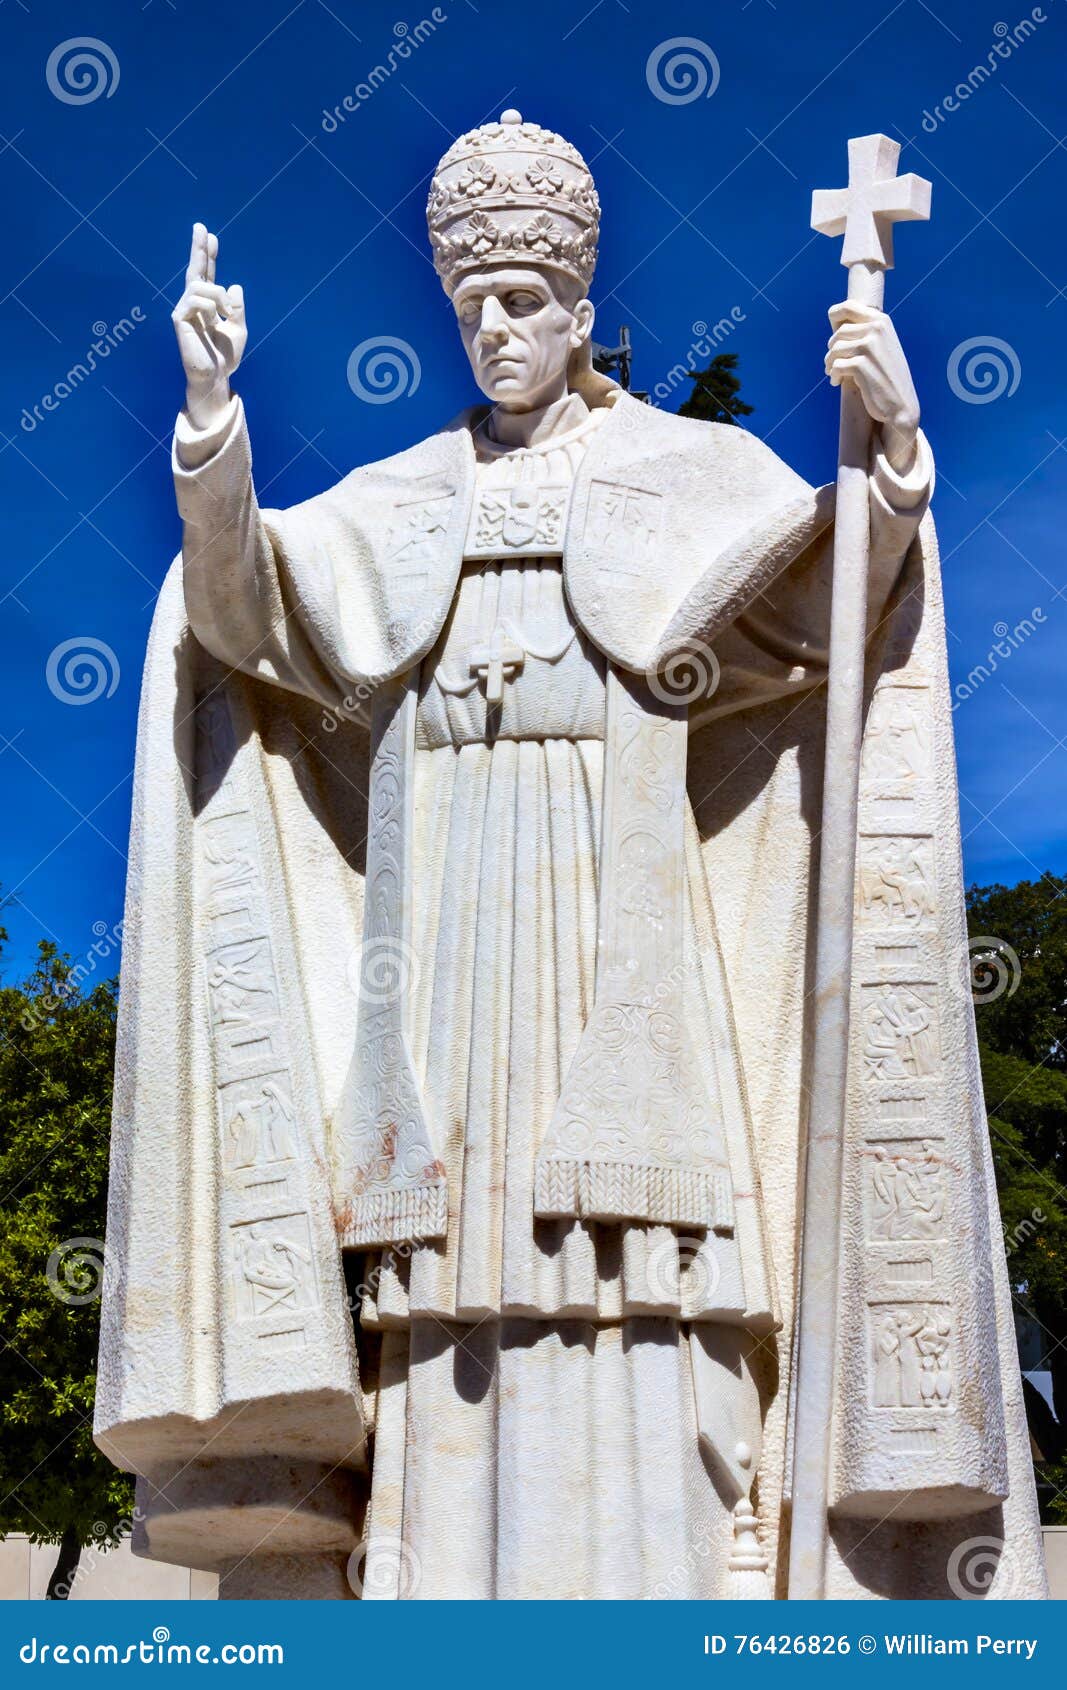 pope pius xii statue basilica of lady of rosary fatima portugal